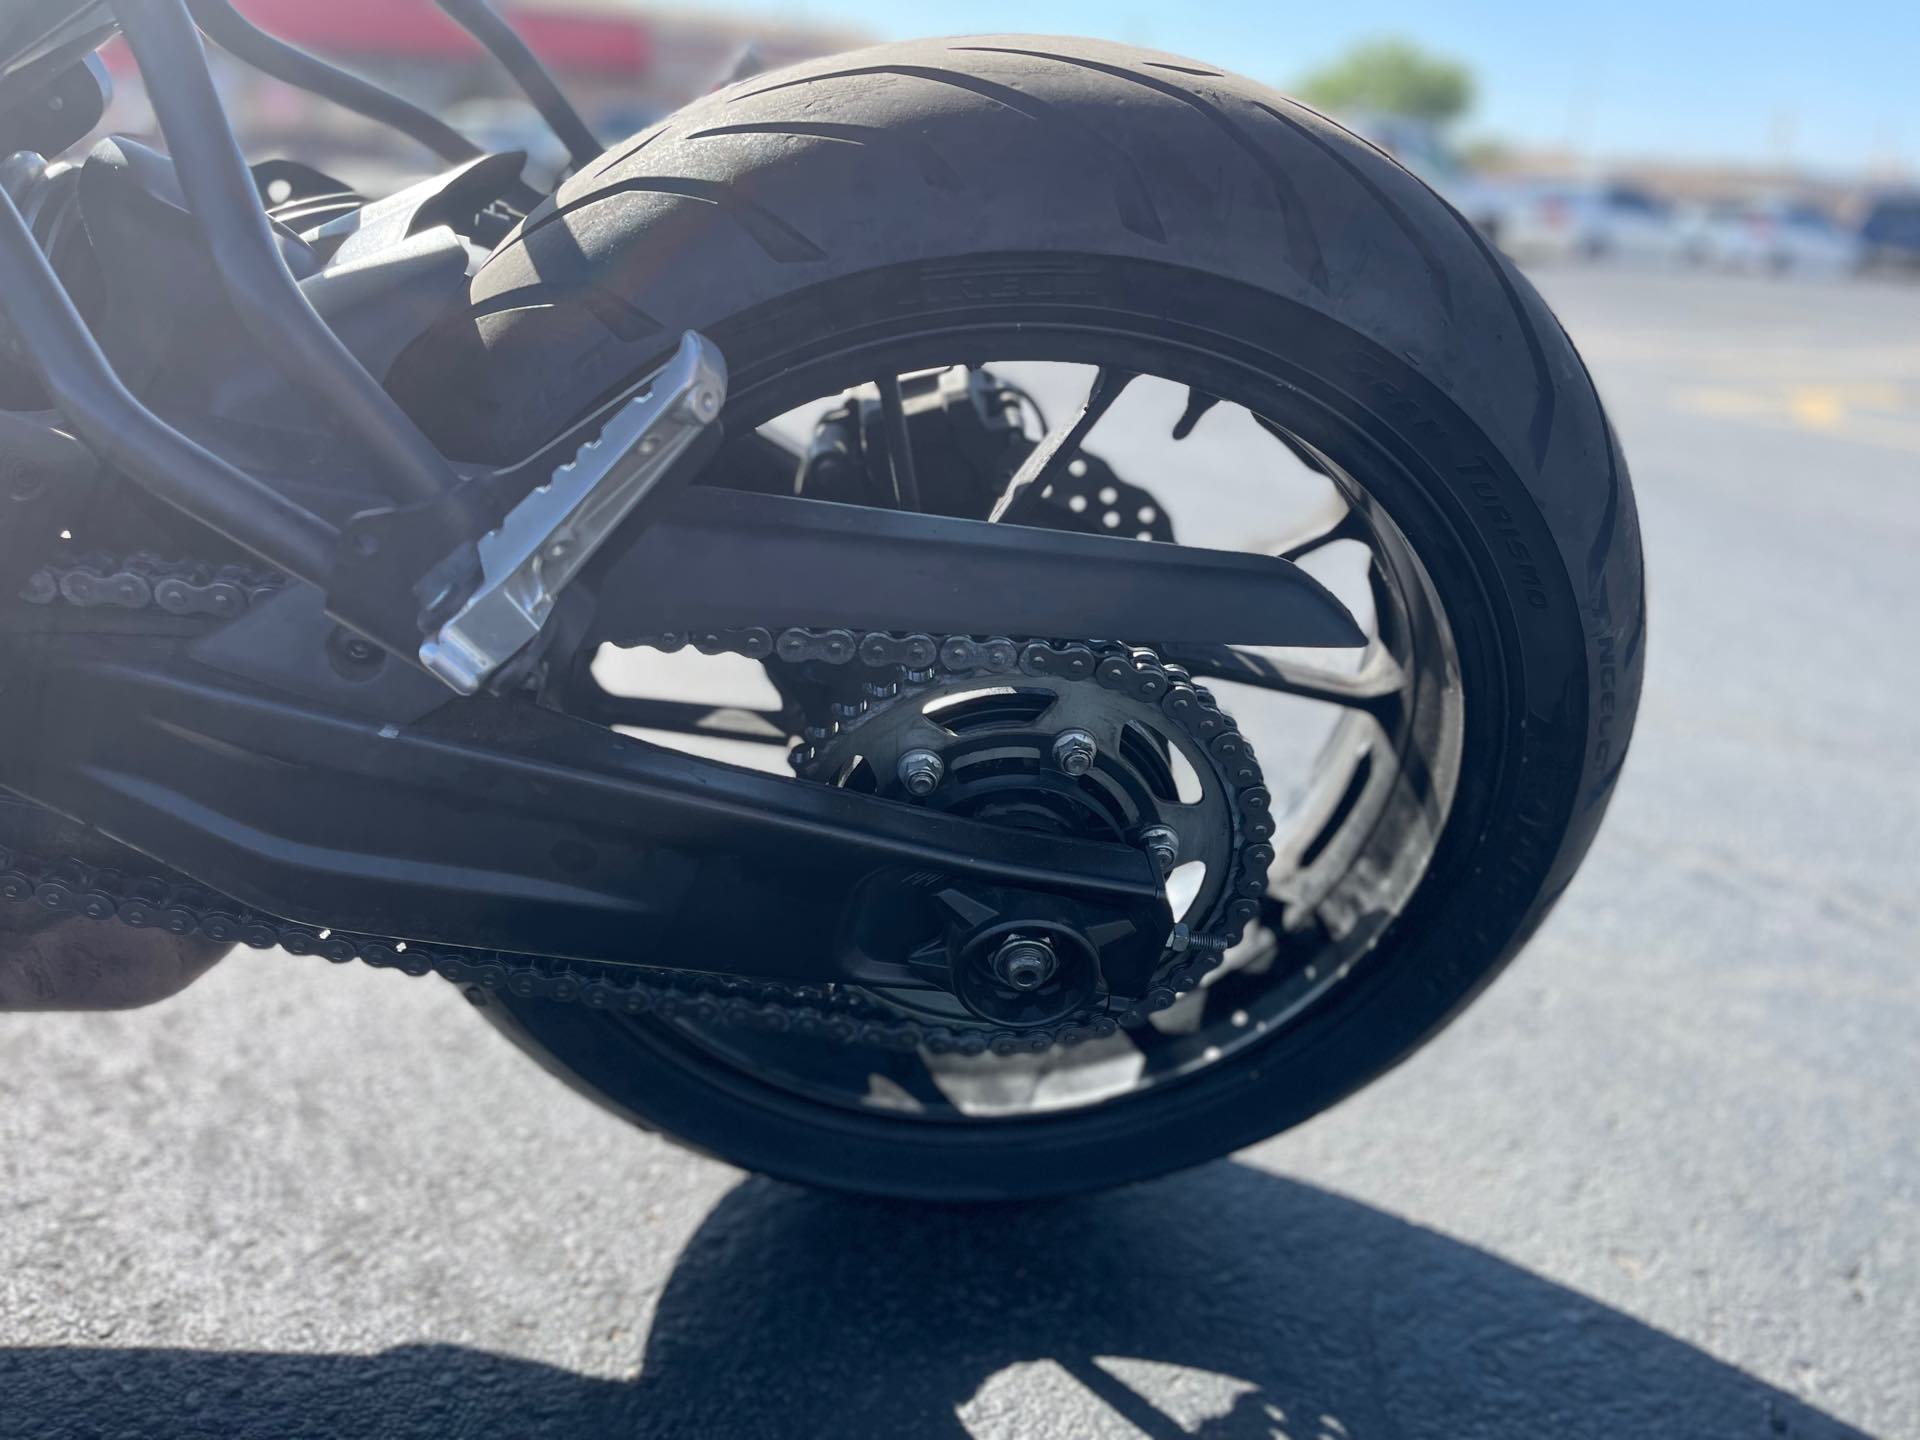 2018 Yamaha XSR 700 at Bobby J's Yamaha, Albuquerque, NM 87110